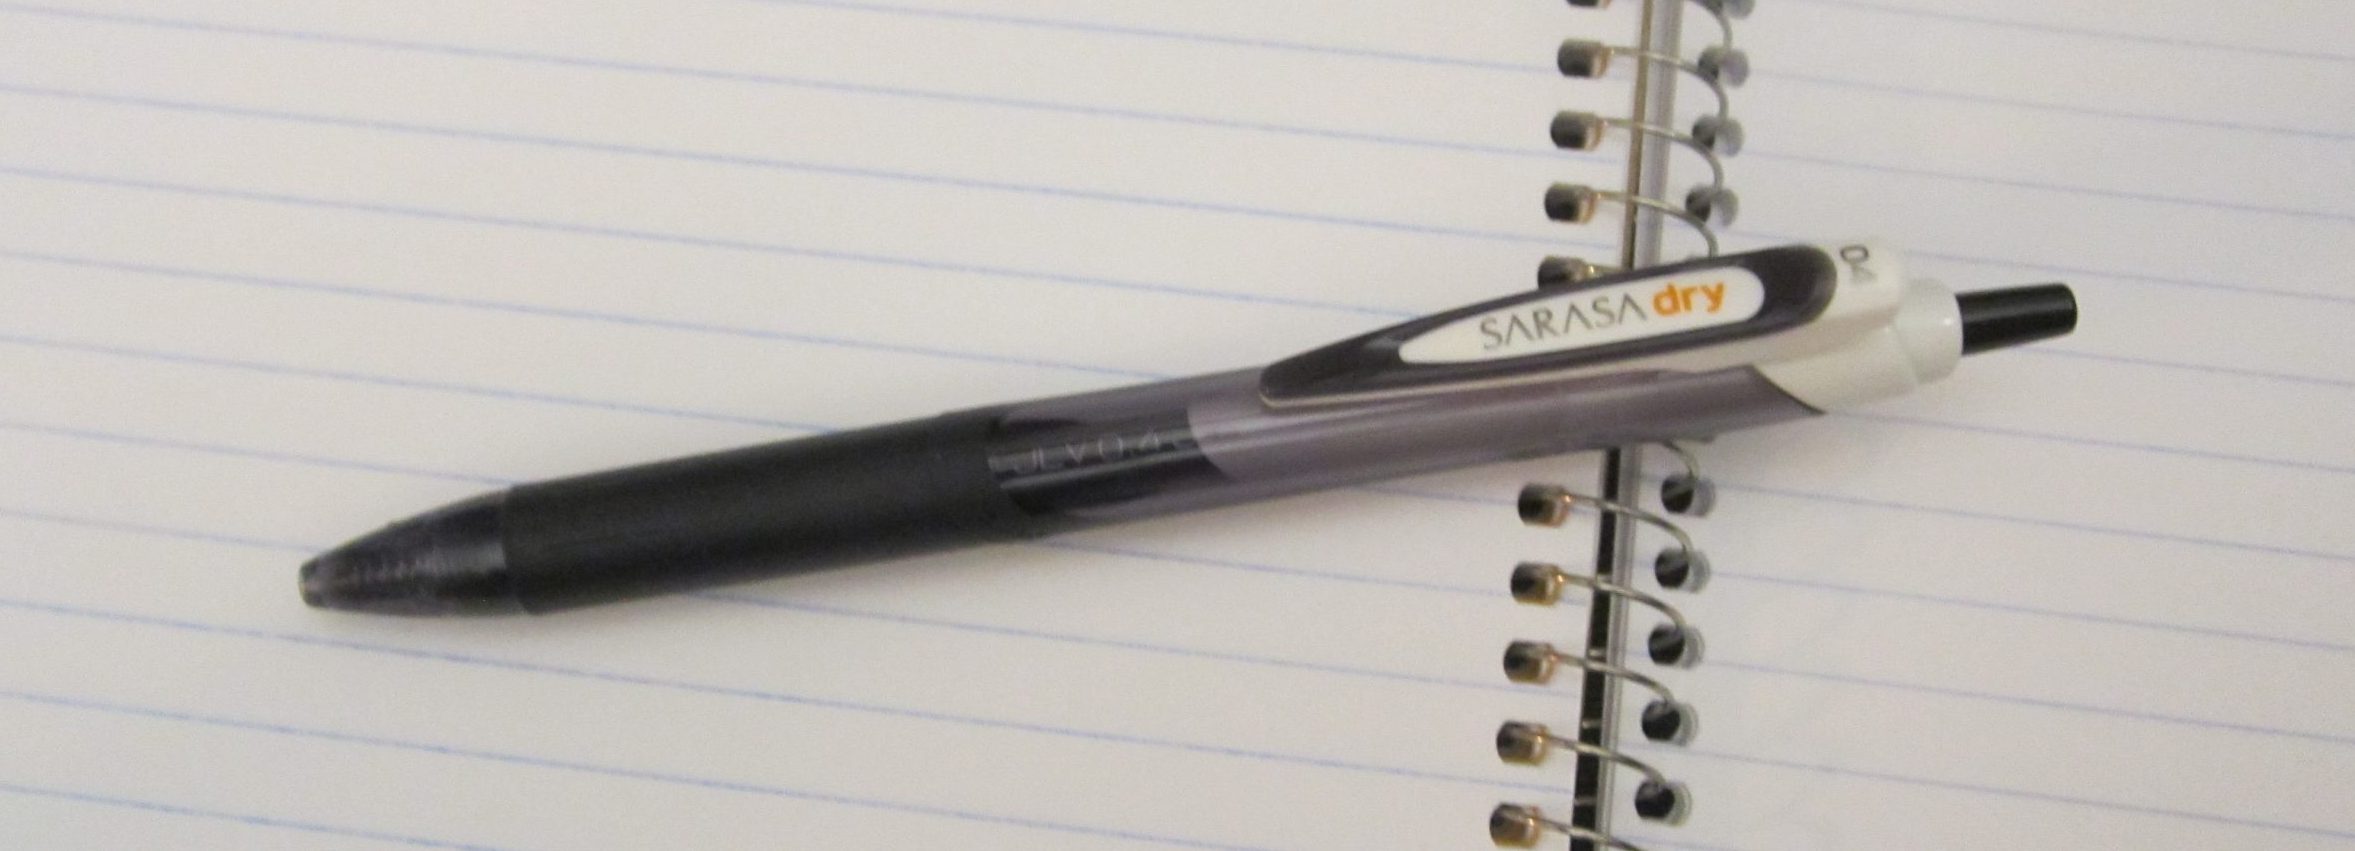 Zebra SARASA dry 0.4mm Ballpoint Pen Refill JLV-0.4 Choose from 3 colors